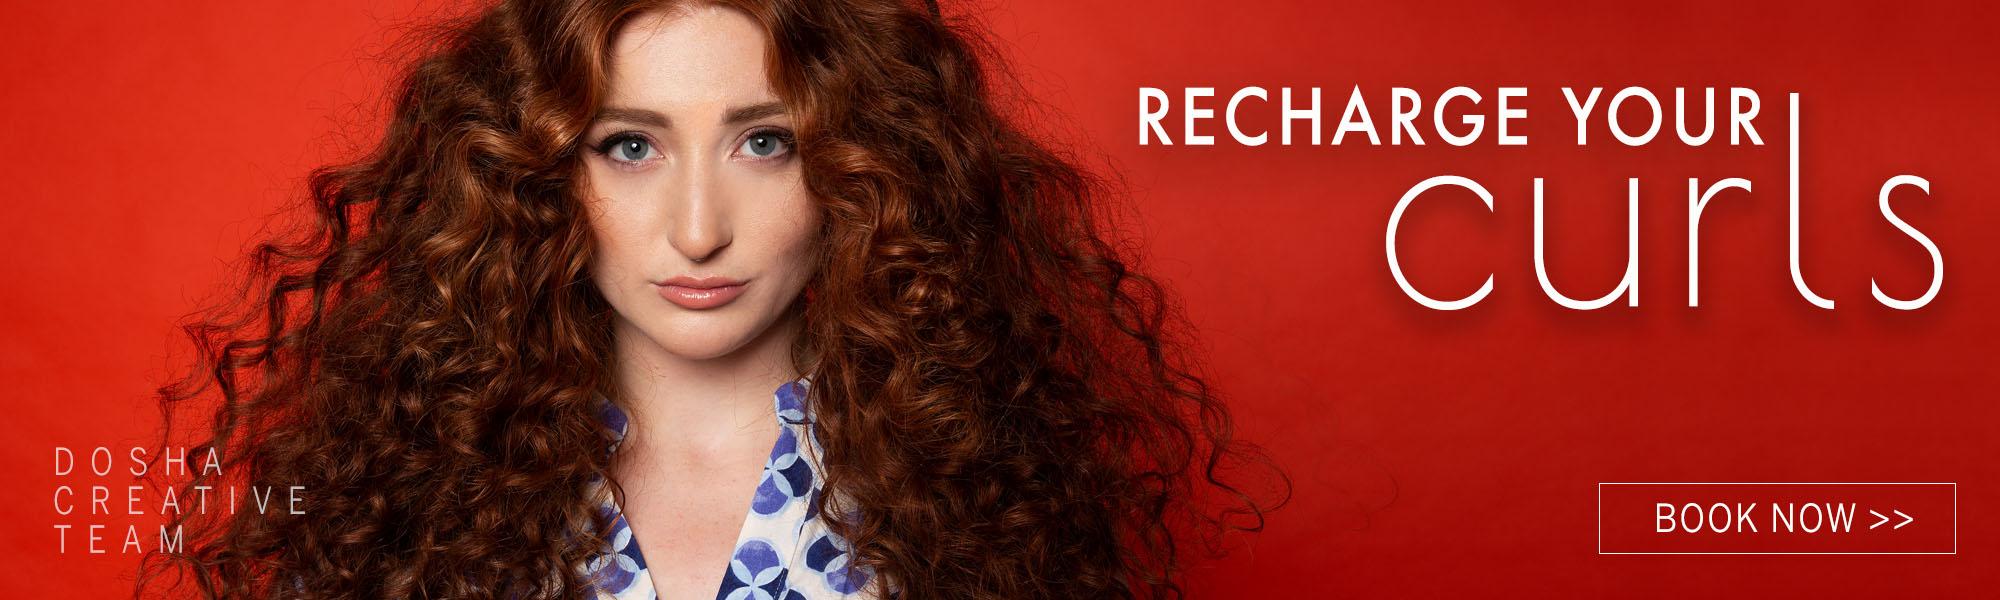 Recharge your curls! Dosha creative team texture photoshoot.